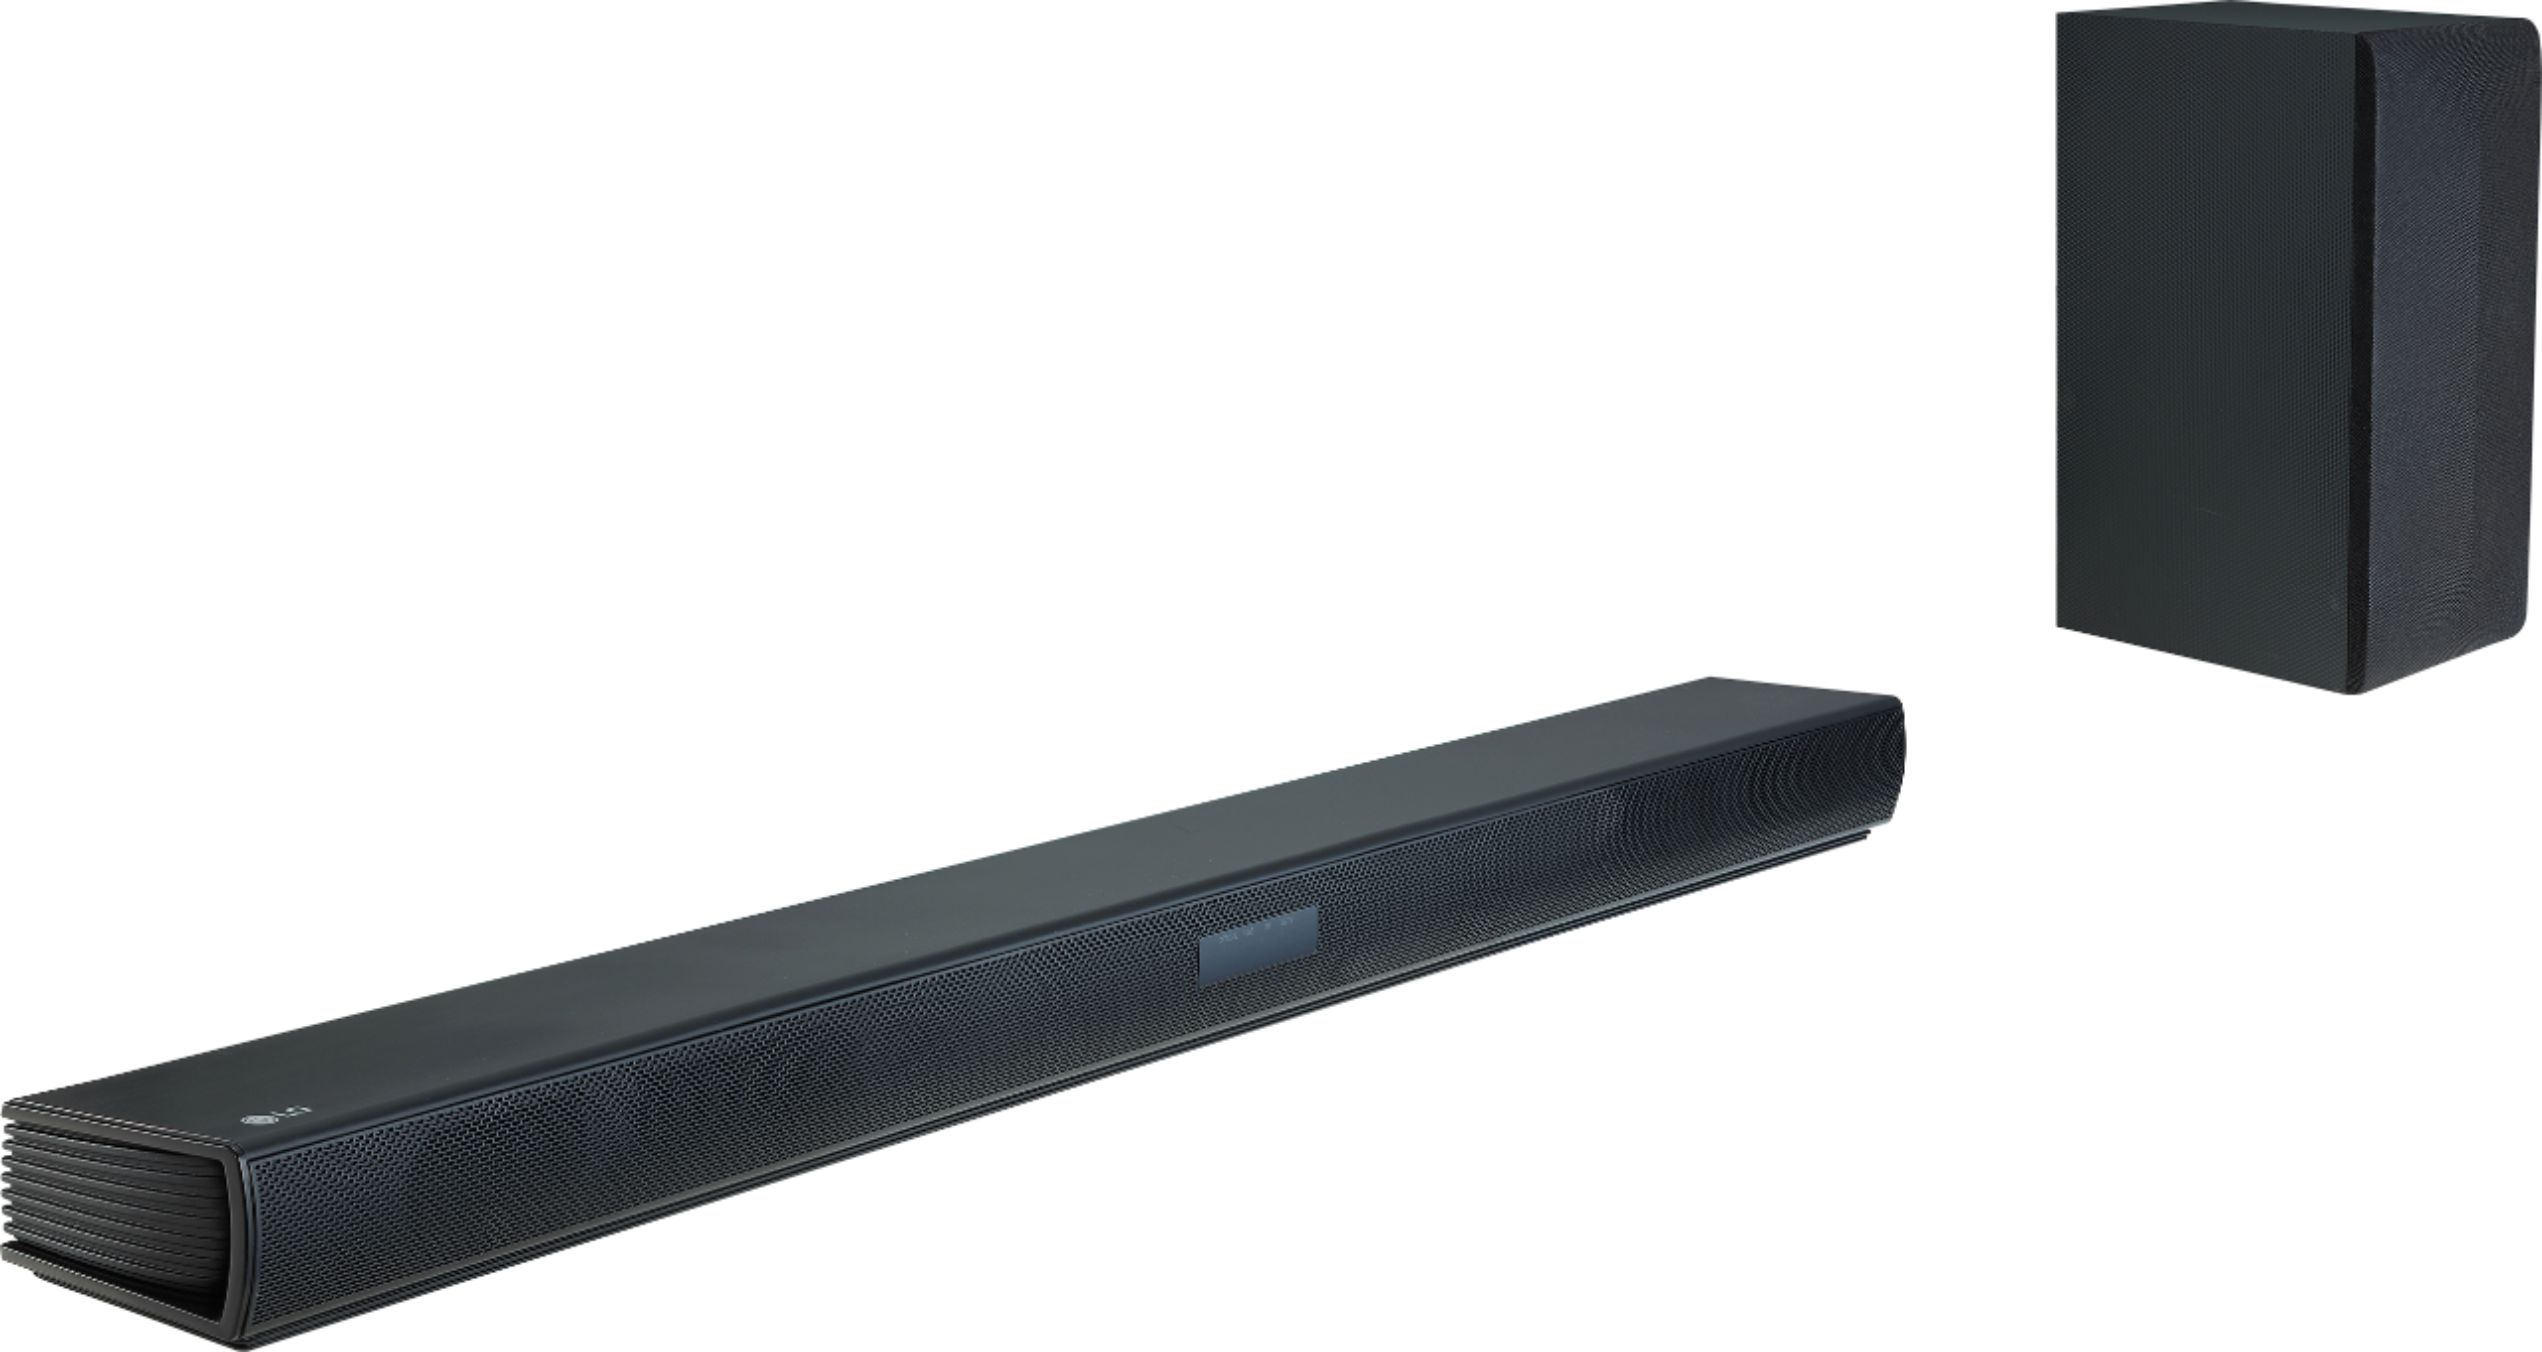 Subwoofer Soundbar with Buy: LG Wireless System SK4D Black Best 2.1-Channel 300W